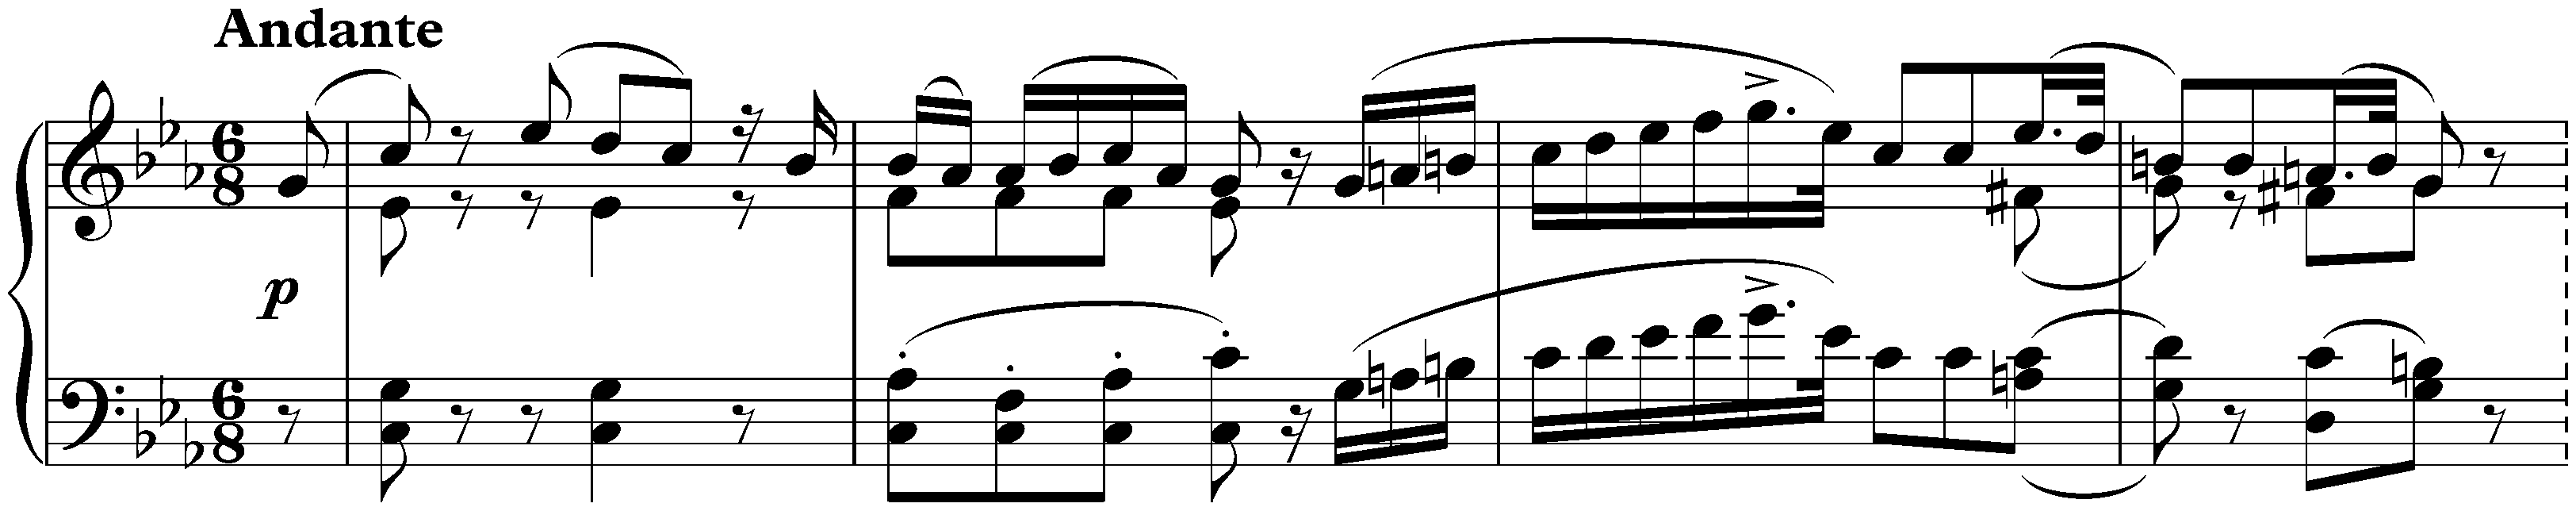 Sonata in C major, D 840; 2. Andante